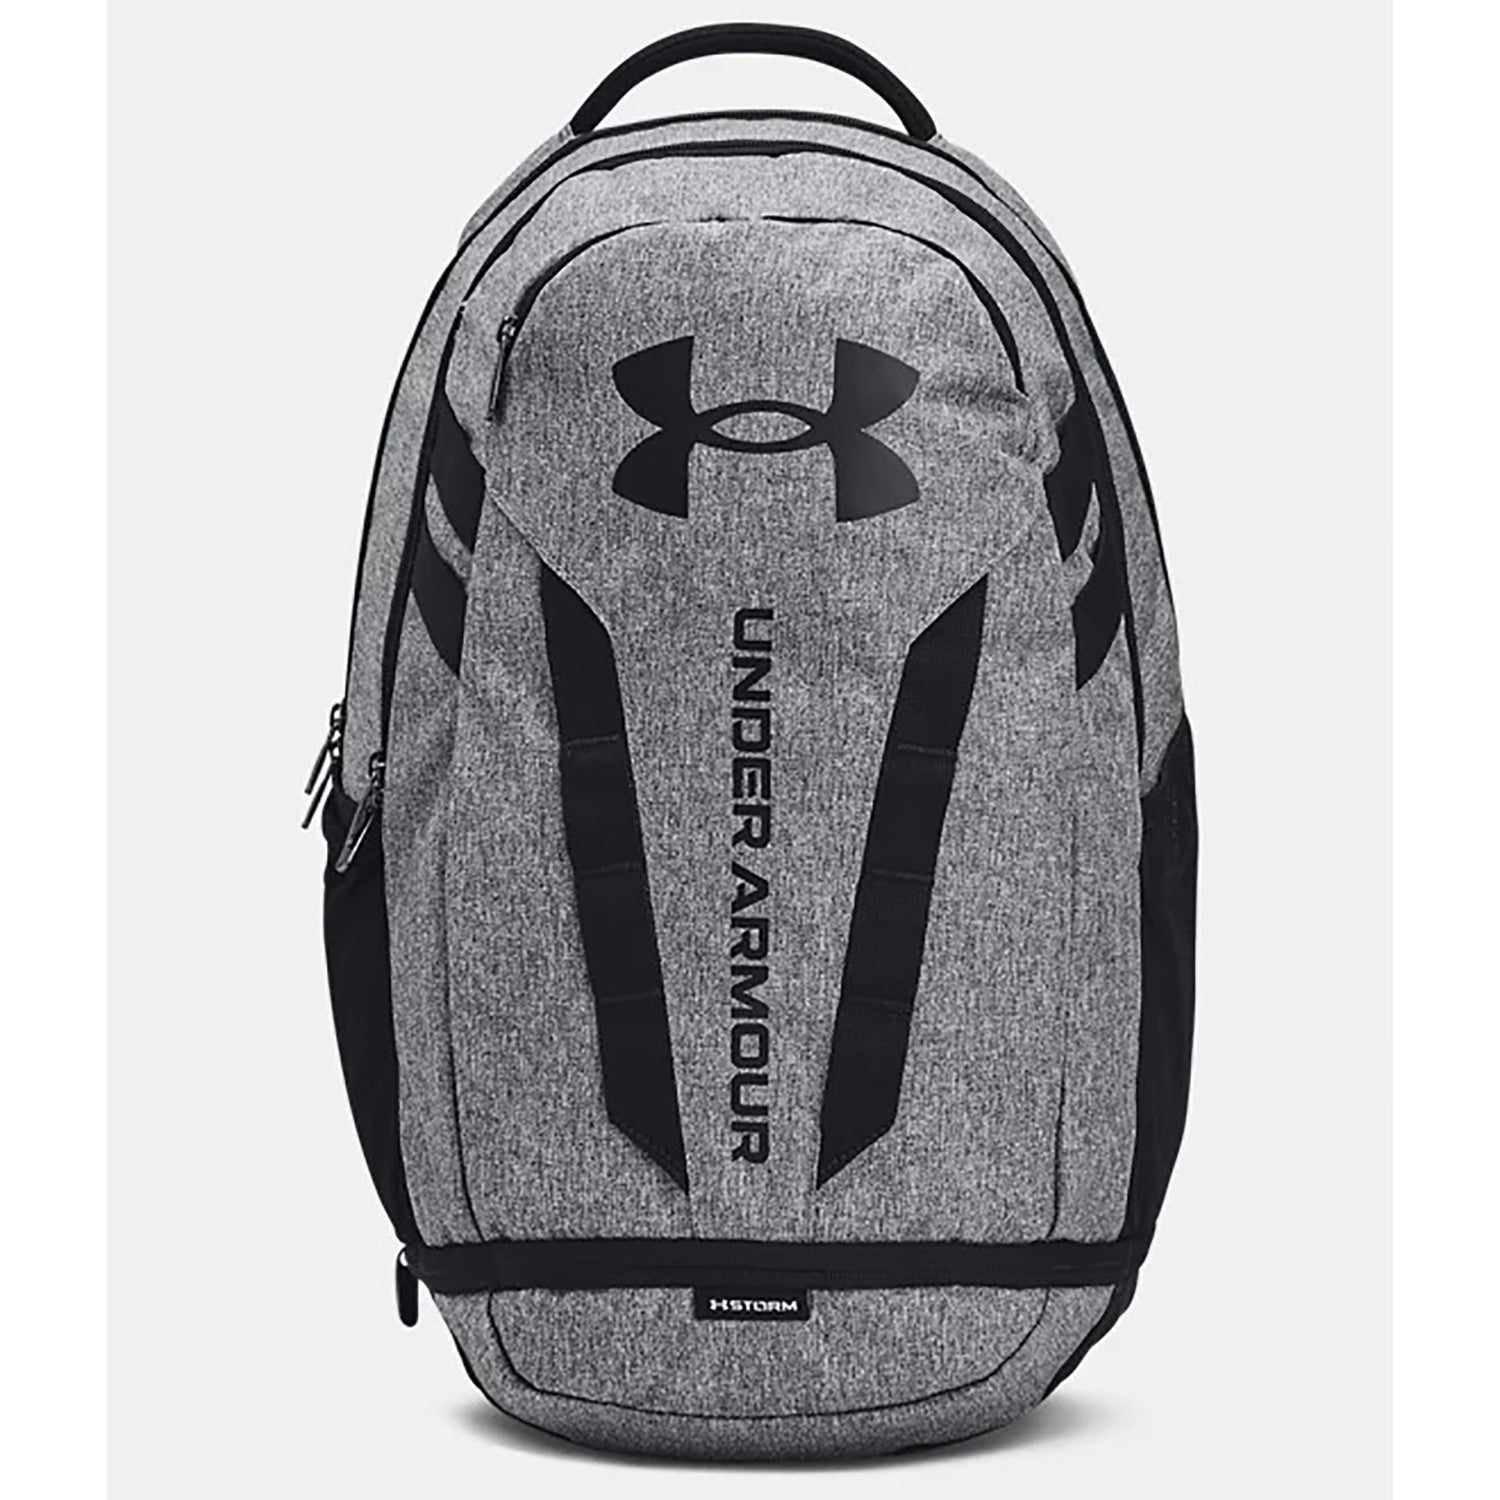 Under Armour 1361176 UA Hustle 5.0 Storm Backpack School Laptop Book Bag